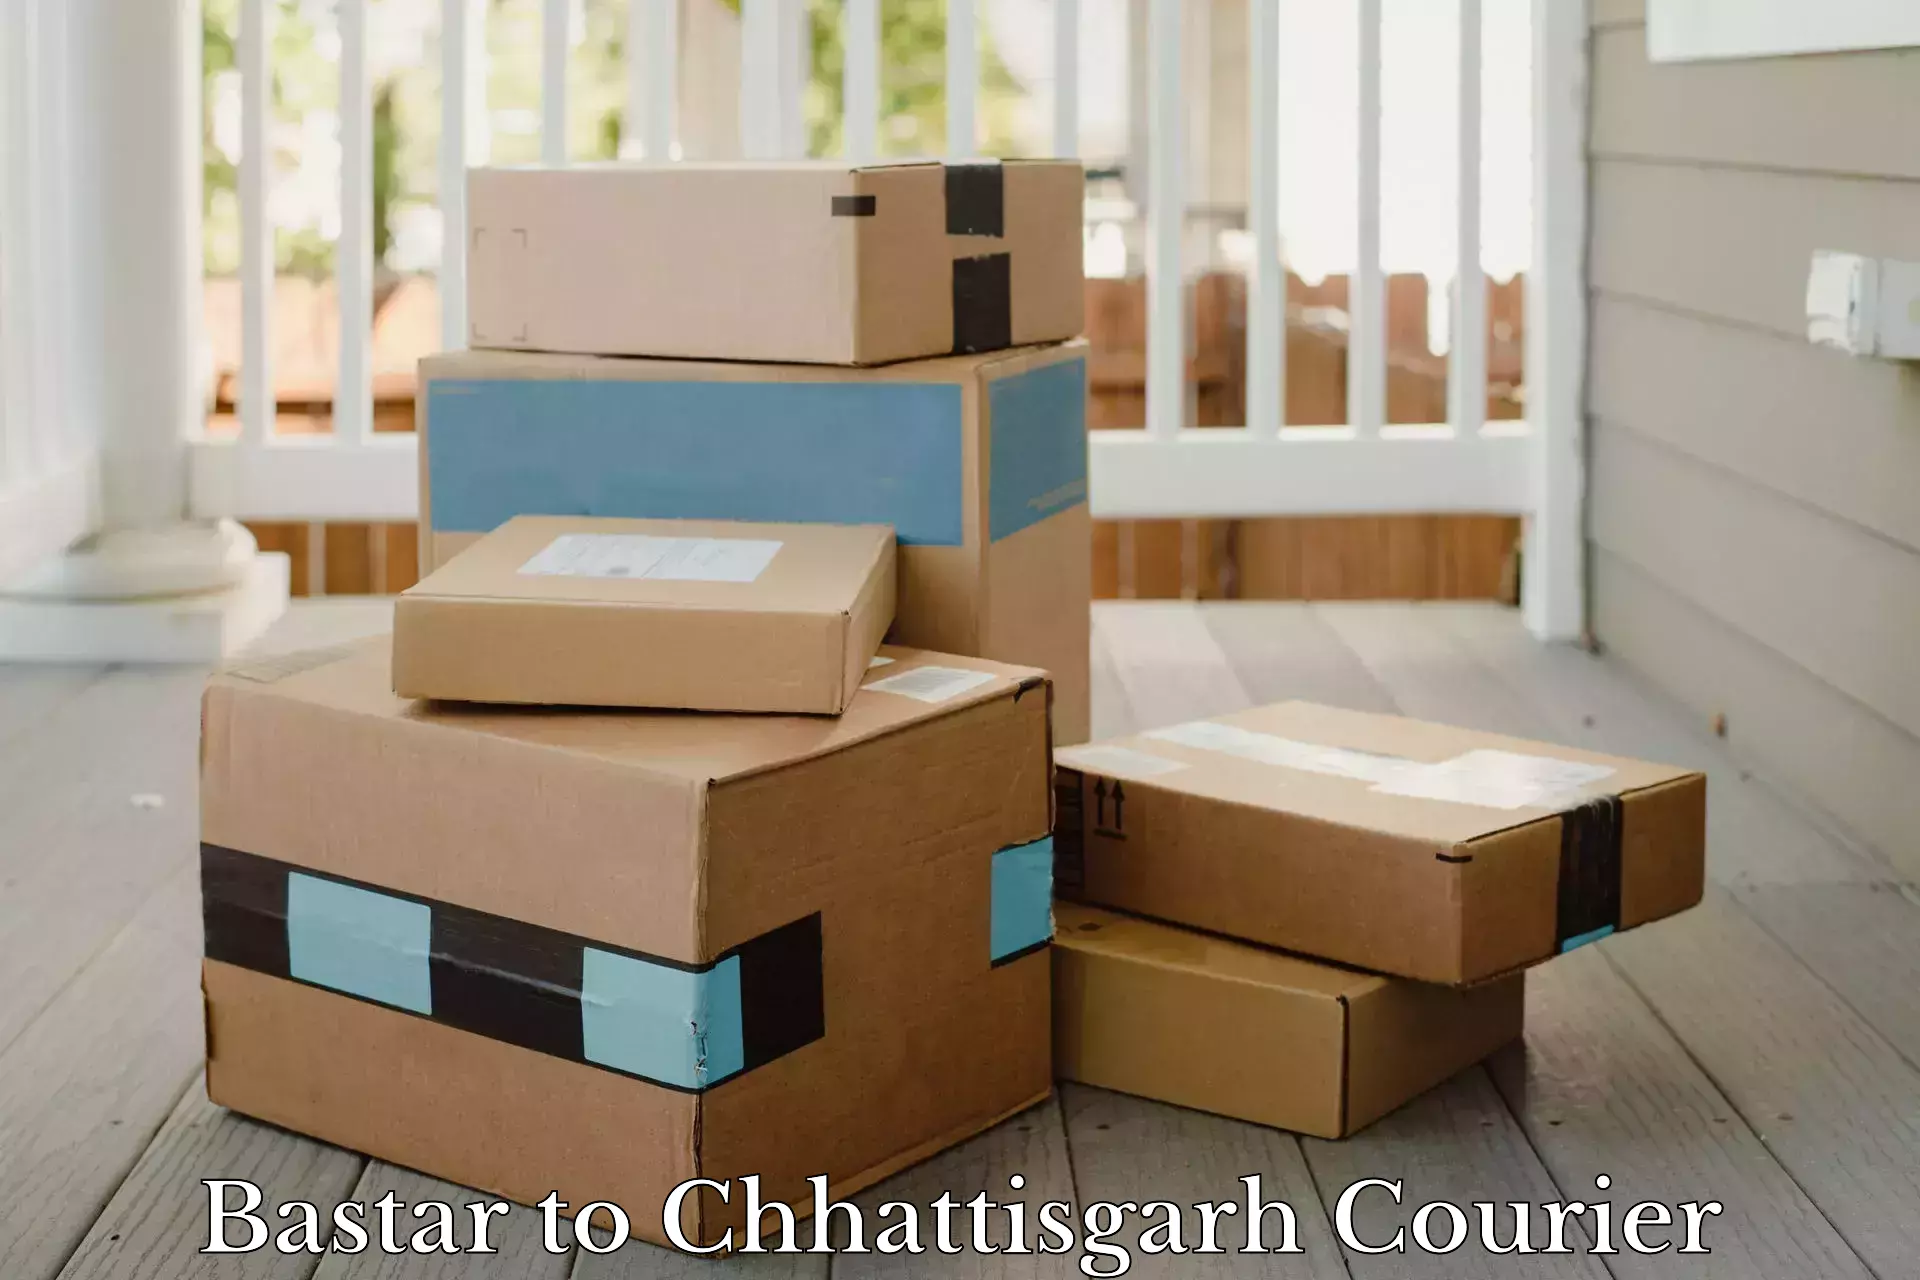 Nationwide delivery network Bastar to Chhattisgarh